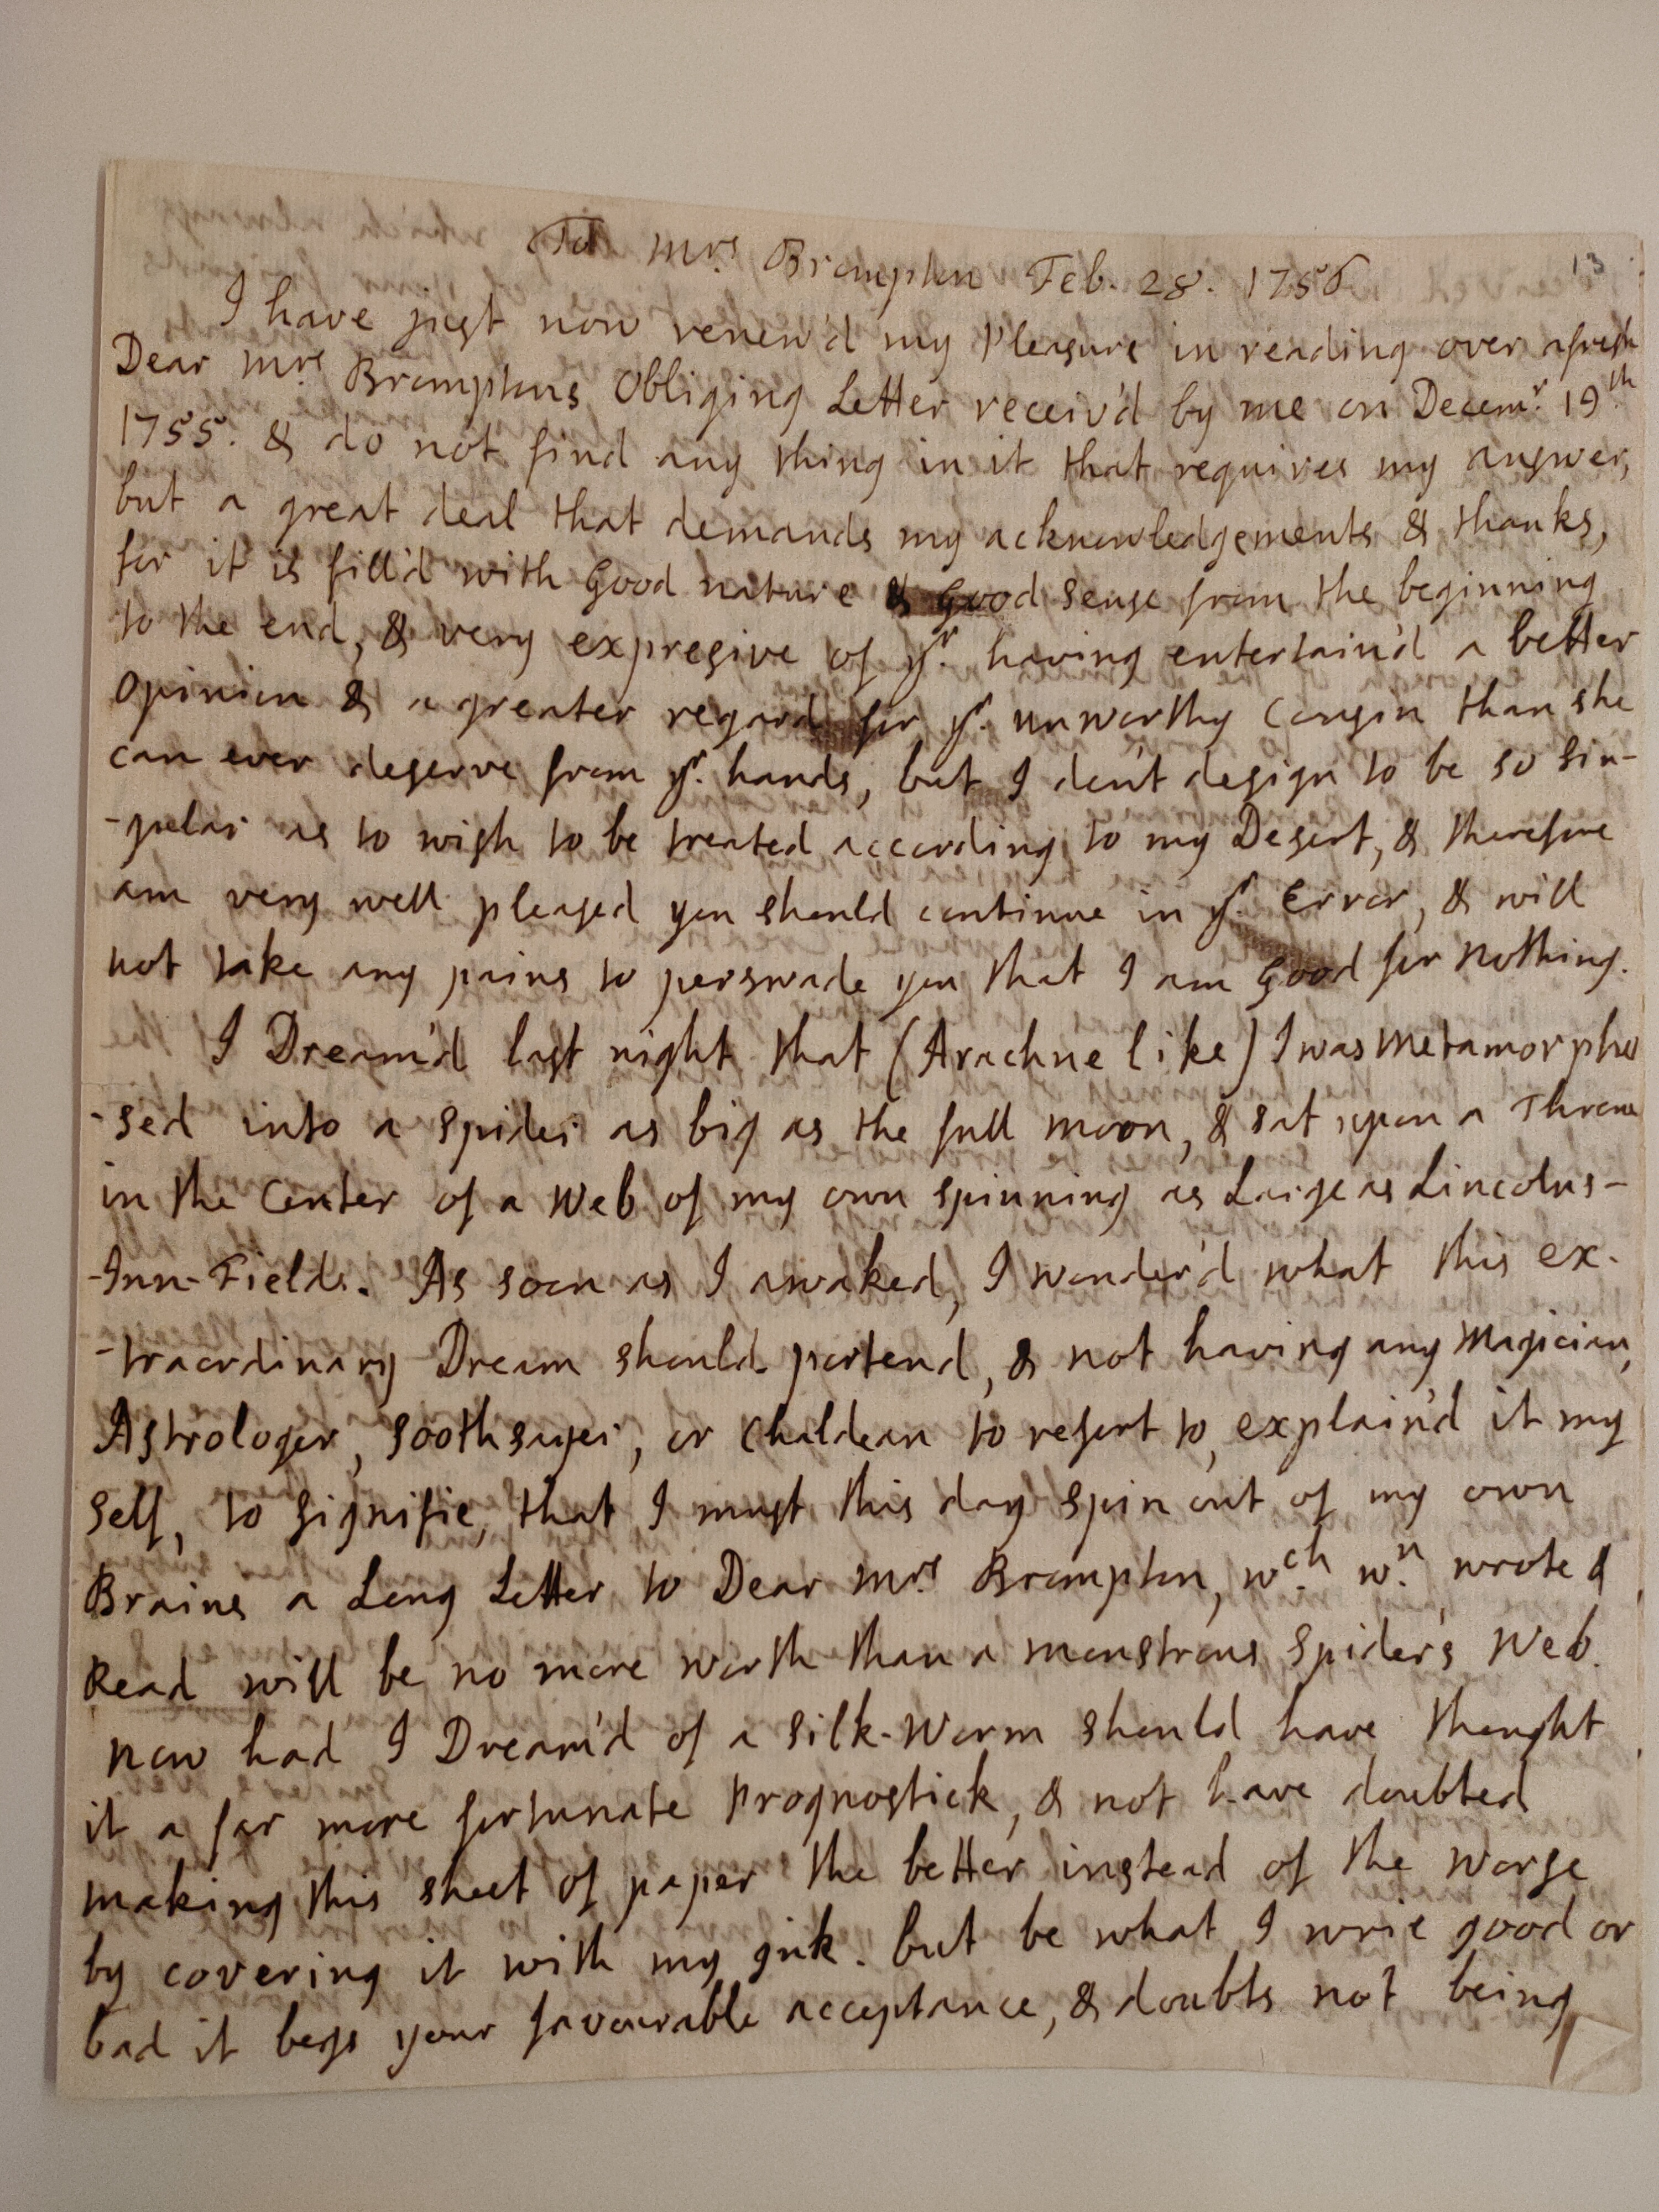 Image #1 of letter: Jane Johnson to Mrs Brompton, 28 February 1756